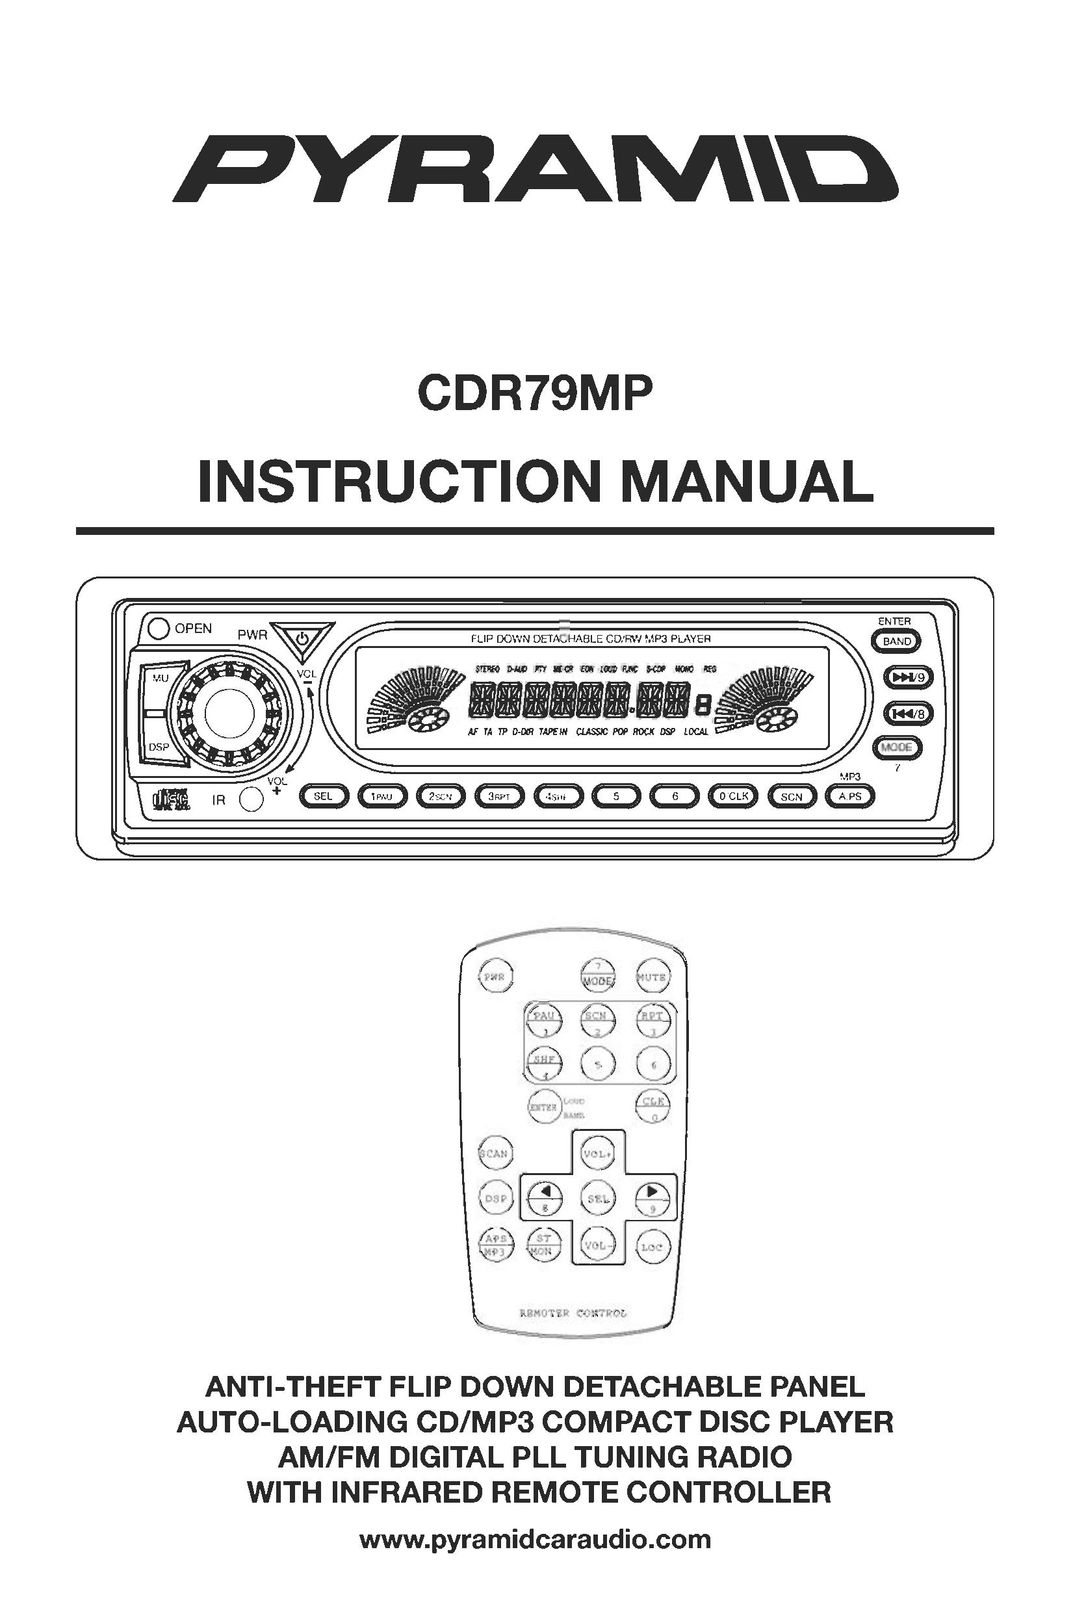 Pyramid Car Audio CDR79MP Car Stereo System User Manual